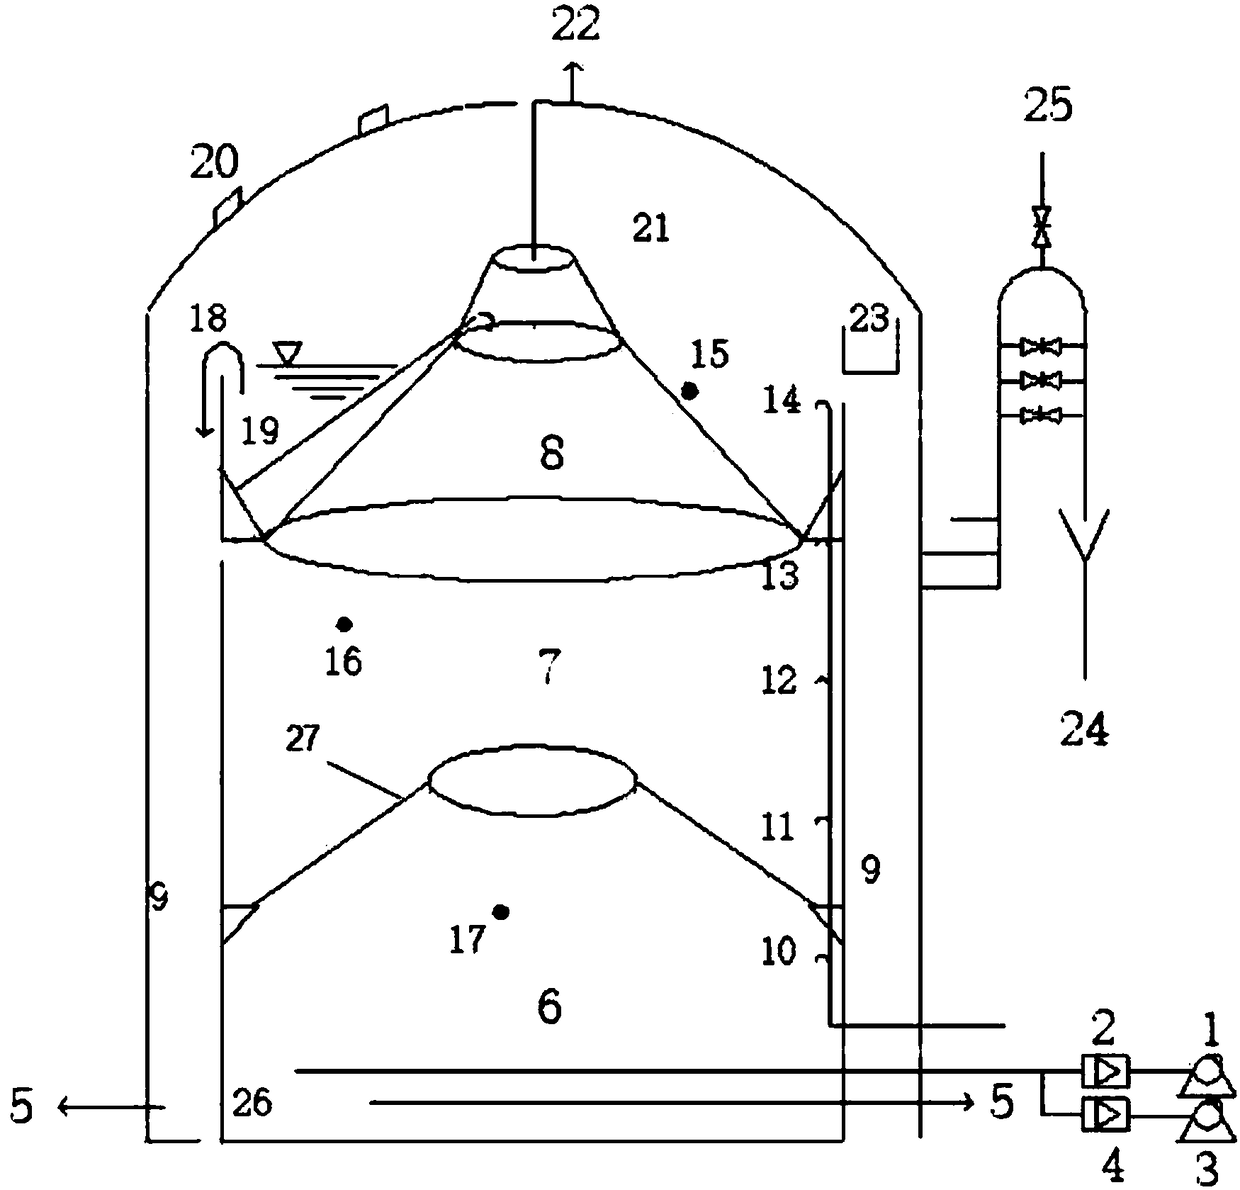 Novel UASB (Upflow Anaerobic Sludge Blanket) combined ABR (Anaerobic Baffled Reactor) granular sludge reactor and use method